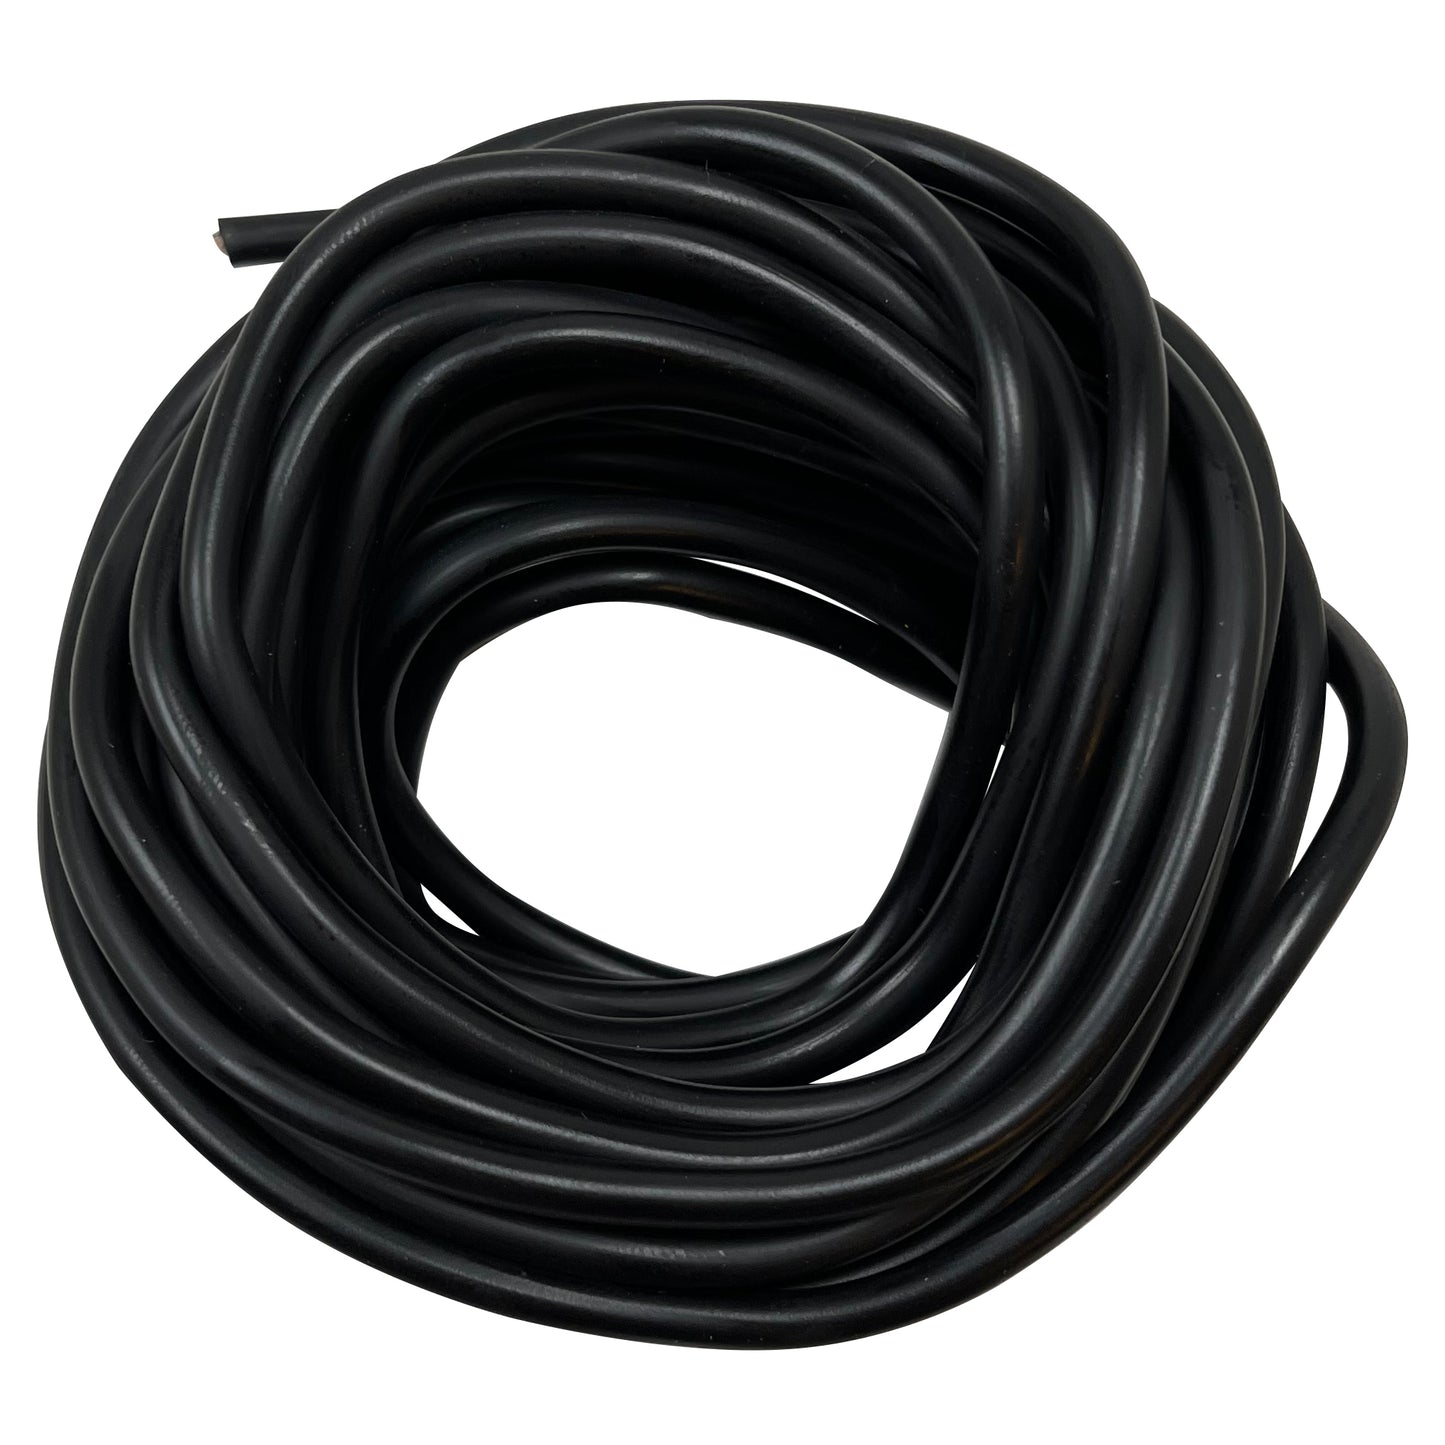 10 Gauge Universal Automotive Fusible Link Wire - 25 FEET